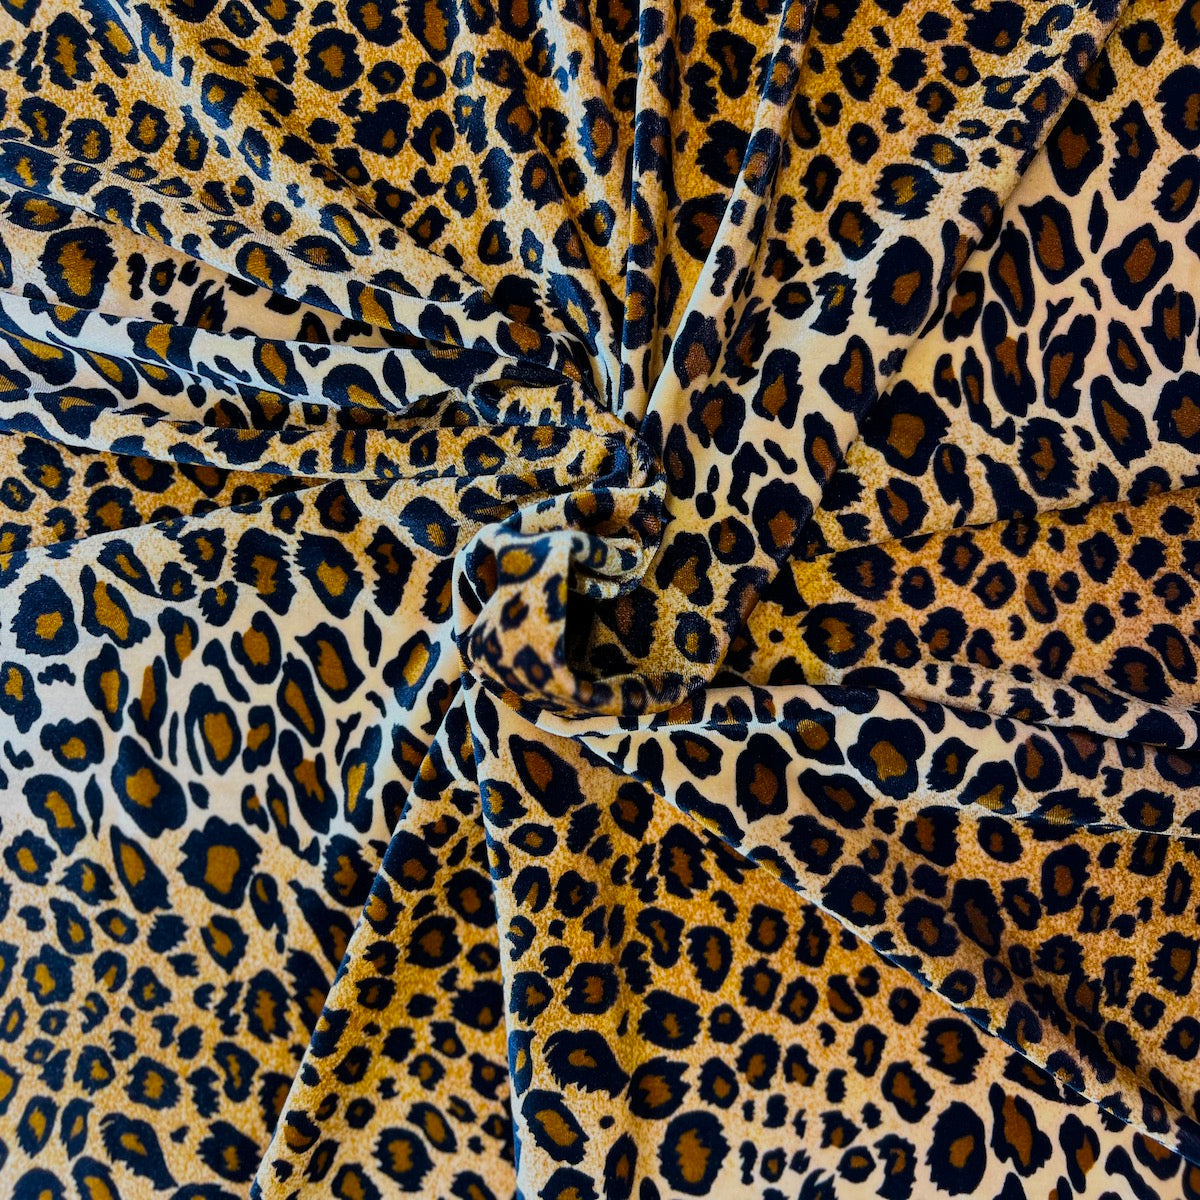 Wild Leopard Print Stretch Velvet Dance-Wear Apparel Costume